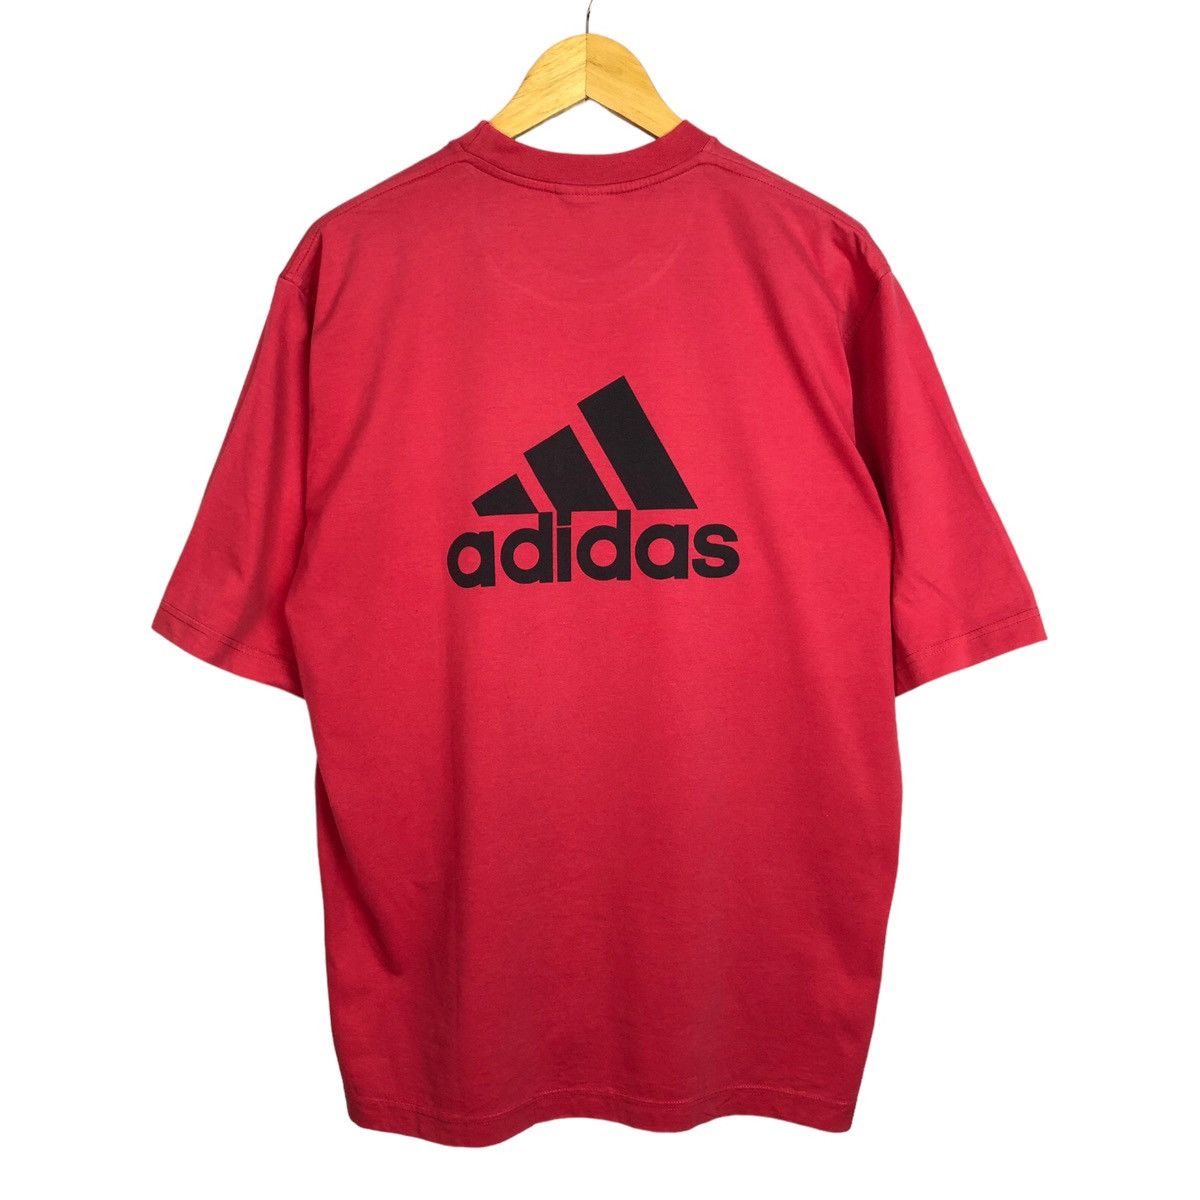 Adidas Vintage t-shirt Adidas Streetball Challenge 1999s original Size US XL / EU 56 / 4 - 2 Preview